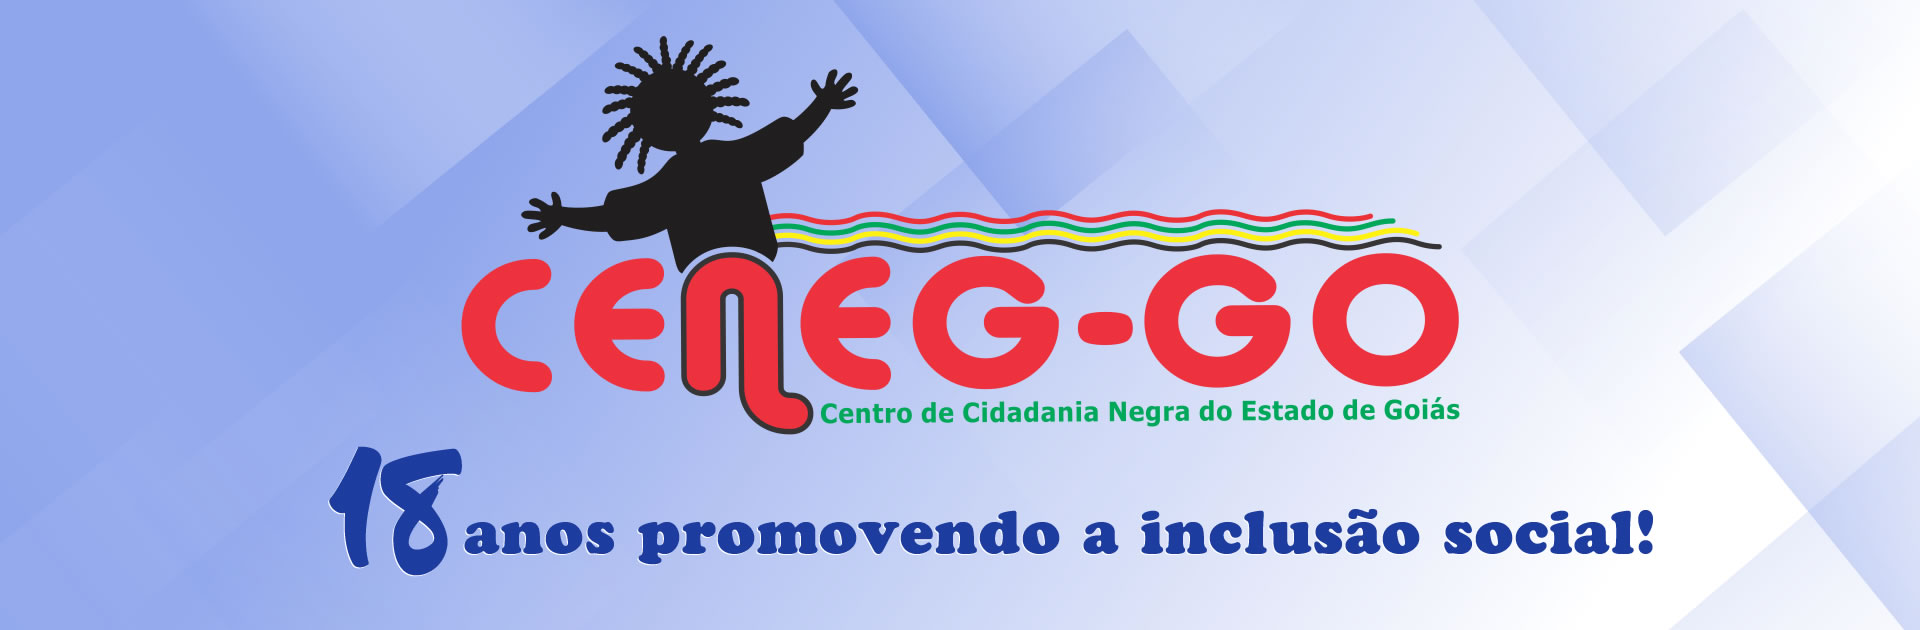 Centro de Cidadania Negra do Estado de Goiás - CENEGGO